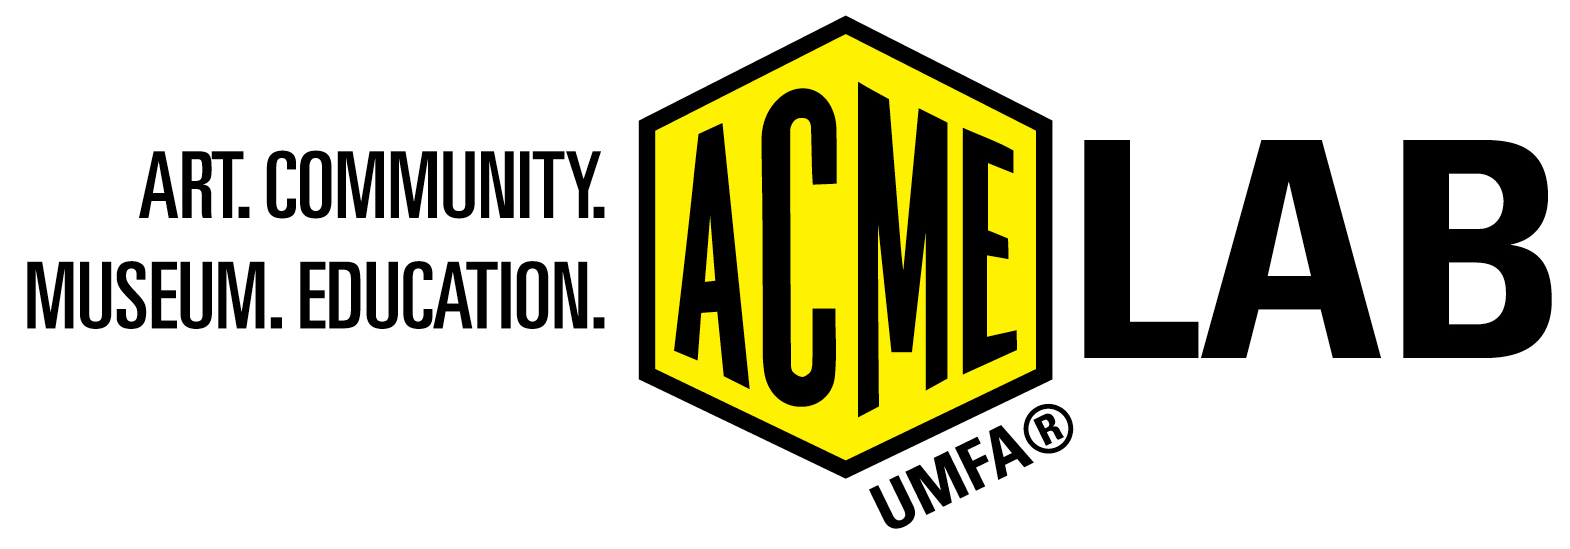 ACME Lab logo Art Community Museum Education